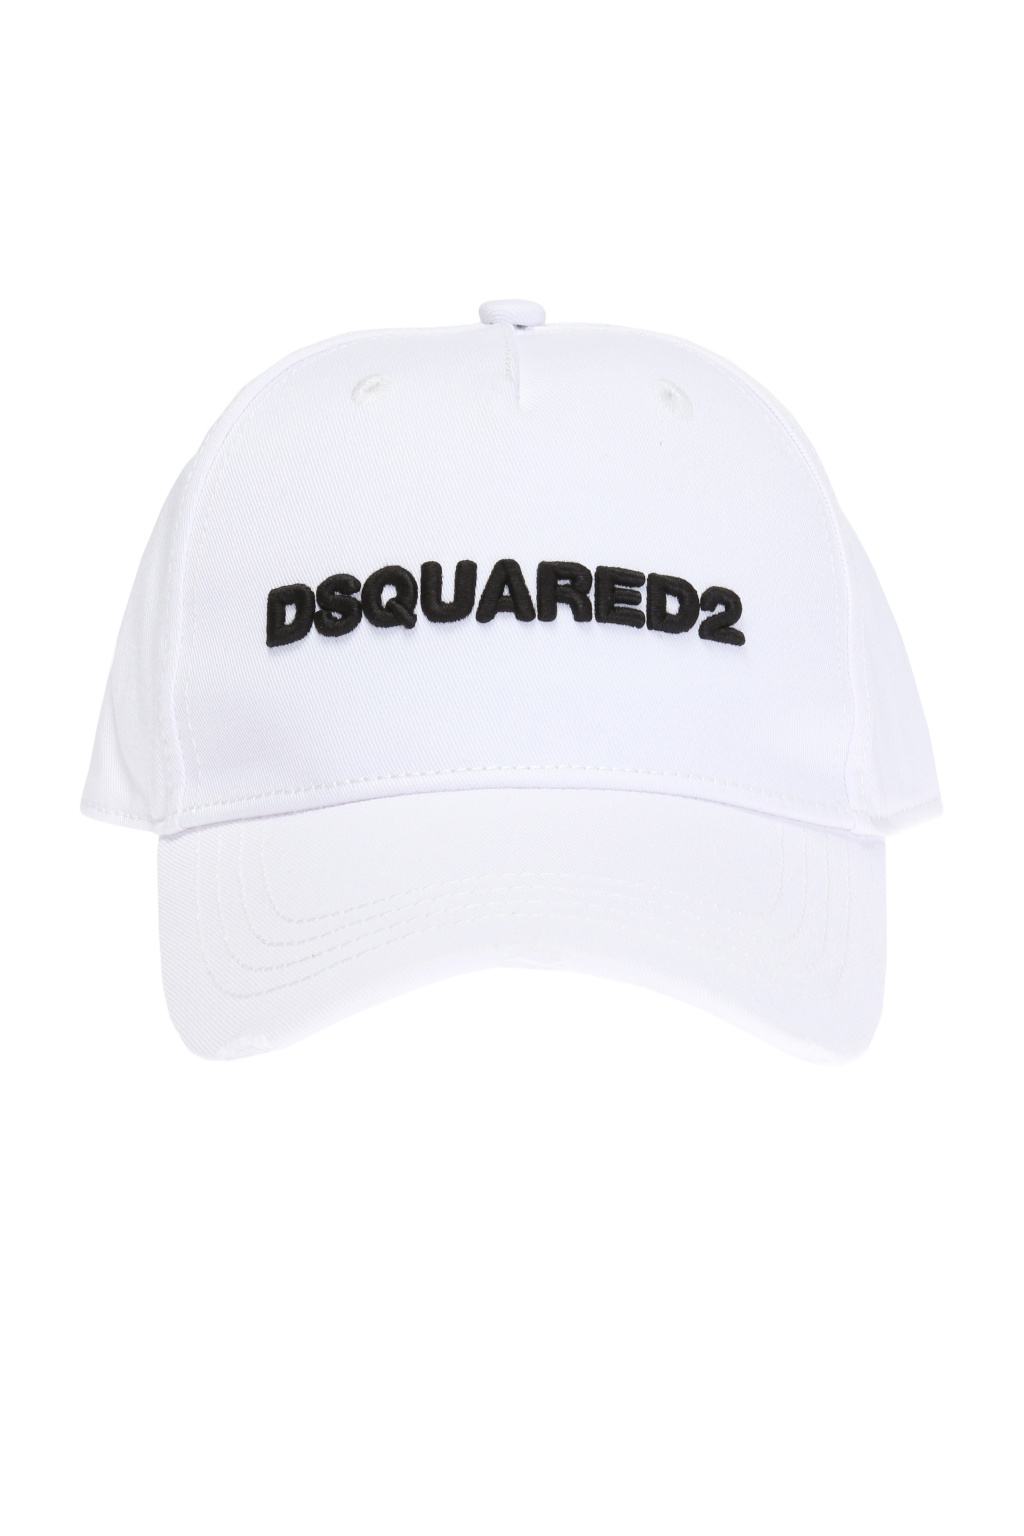 Dsquared2 Women's Columbia PFG Baha Straw Sun Hat